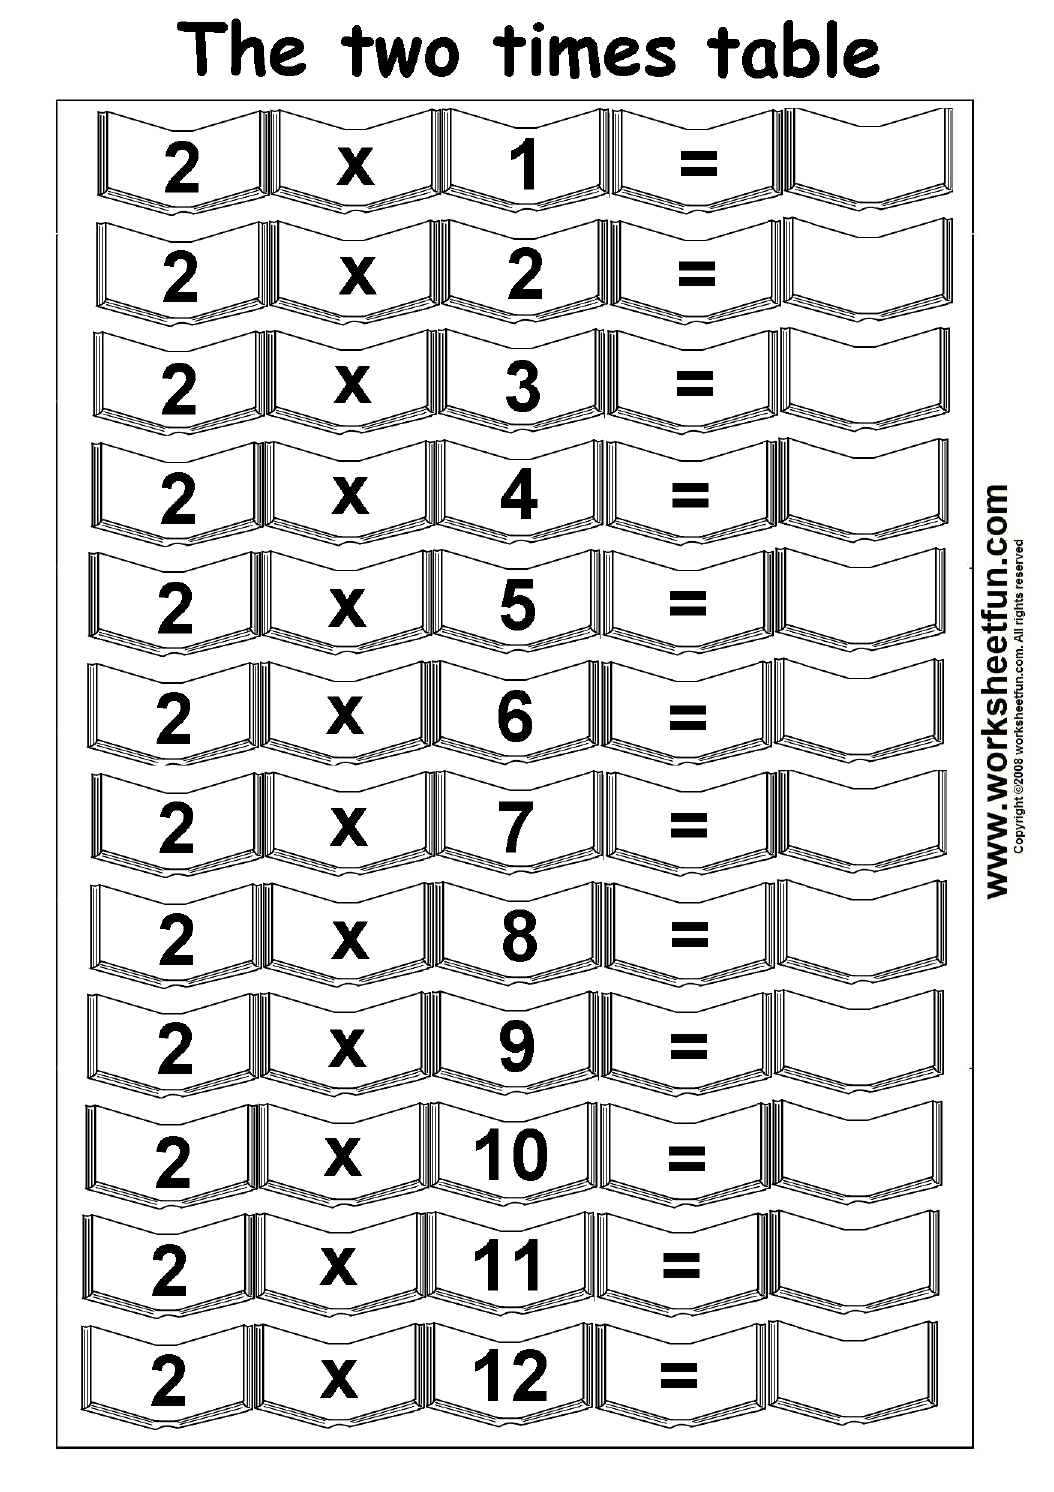 Worksheet Printable Multiplication Tables - 2 times